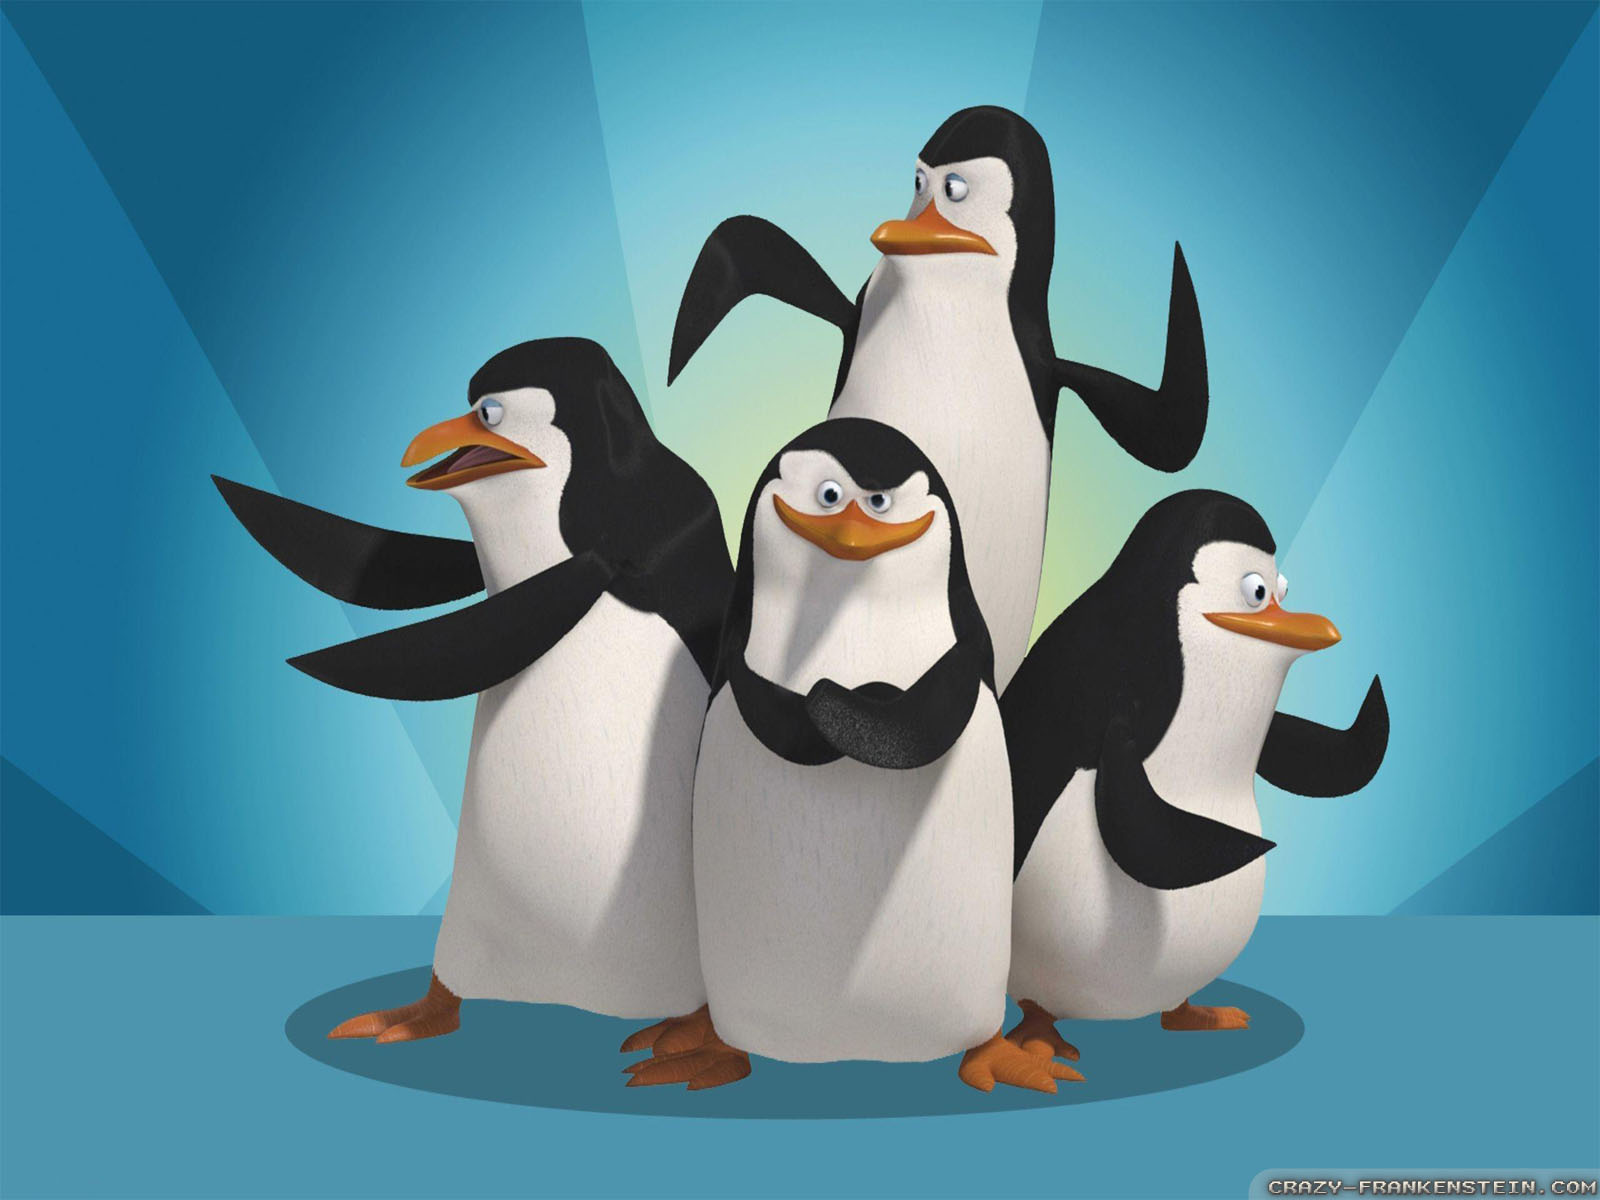 Penguins Of Madagascar Wallpaper 1080p Zb33baa 4usky